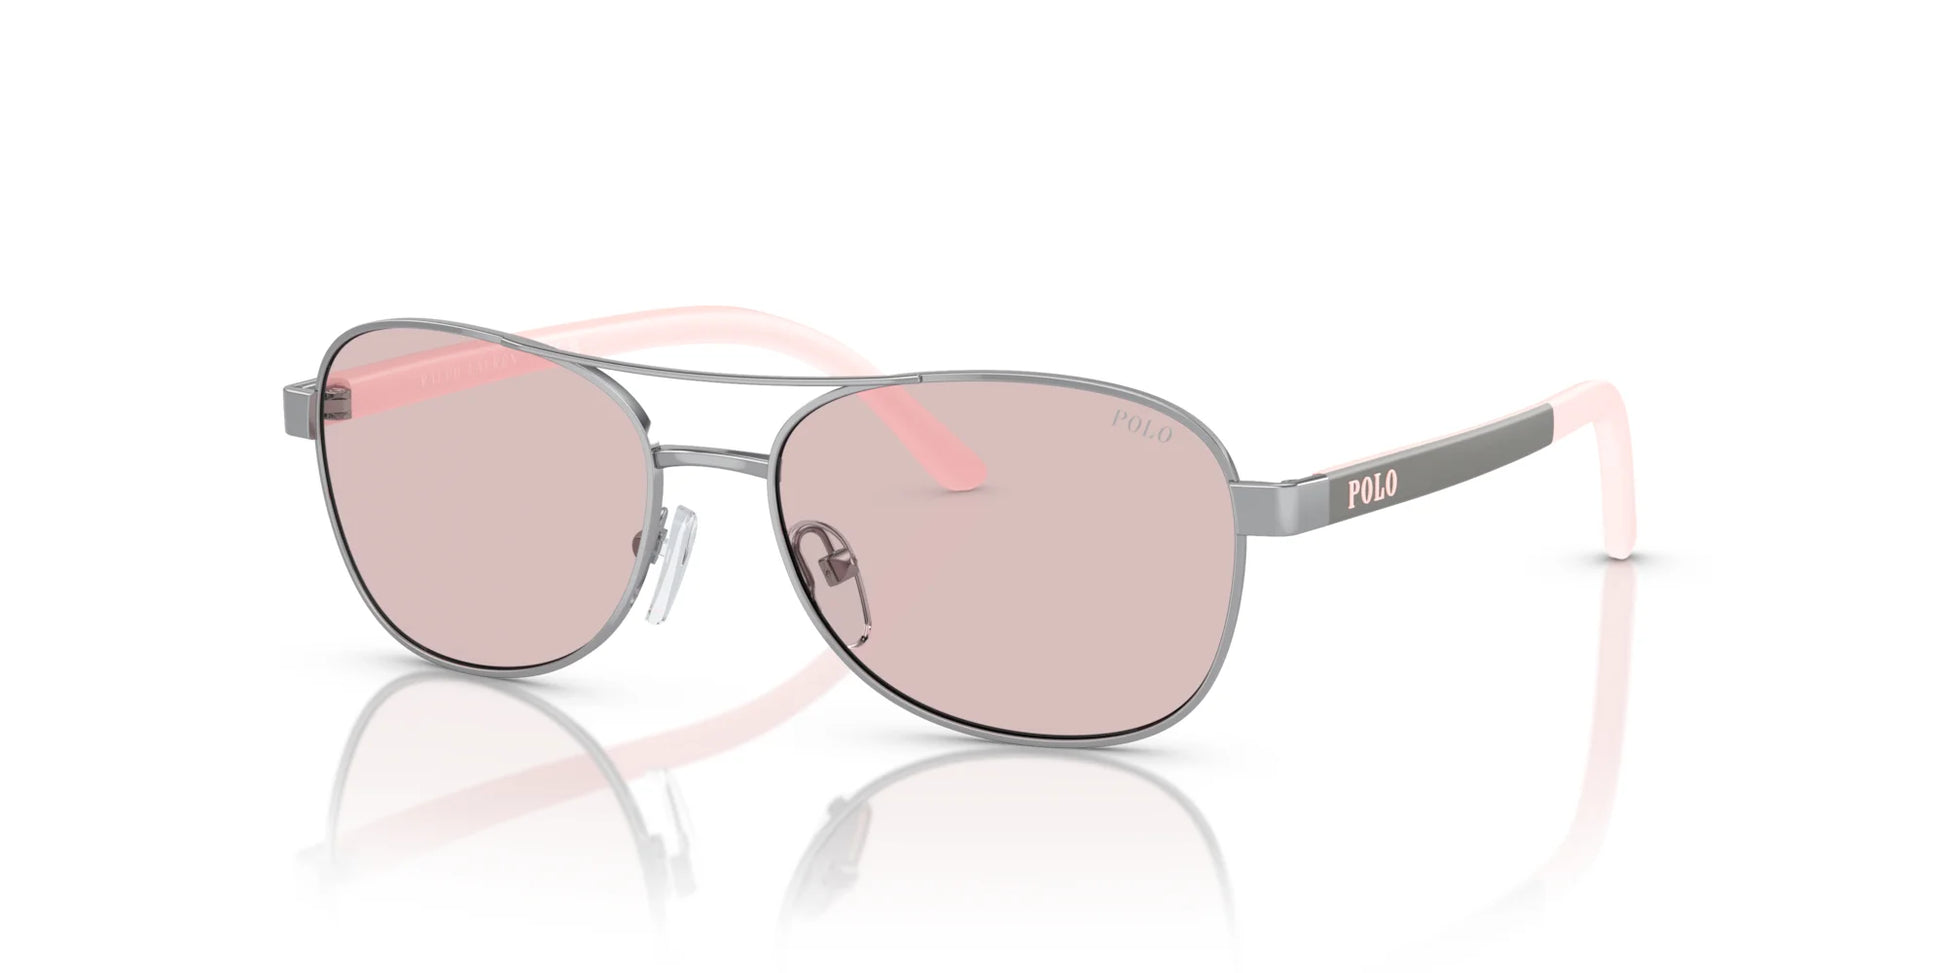 Polo PP9002 Sunglasses Shiny Silver / Pink